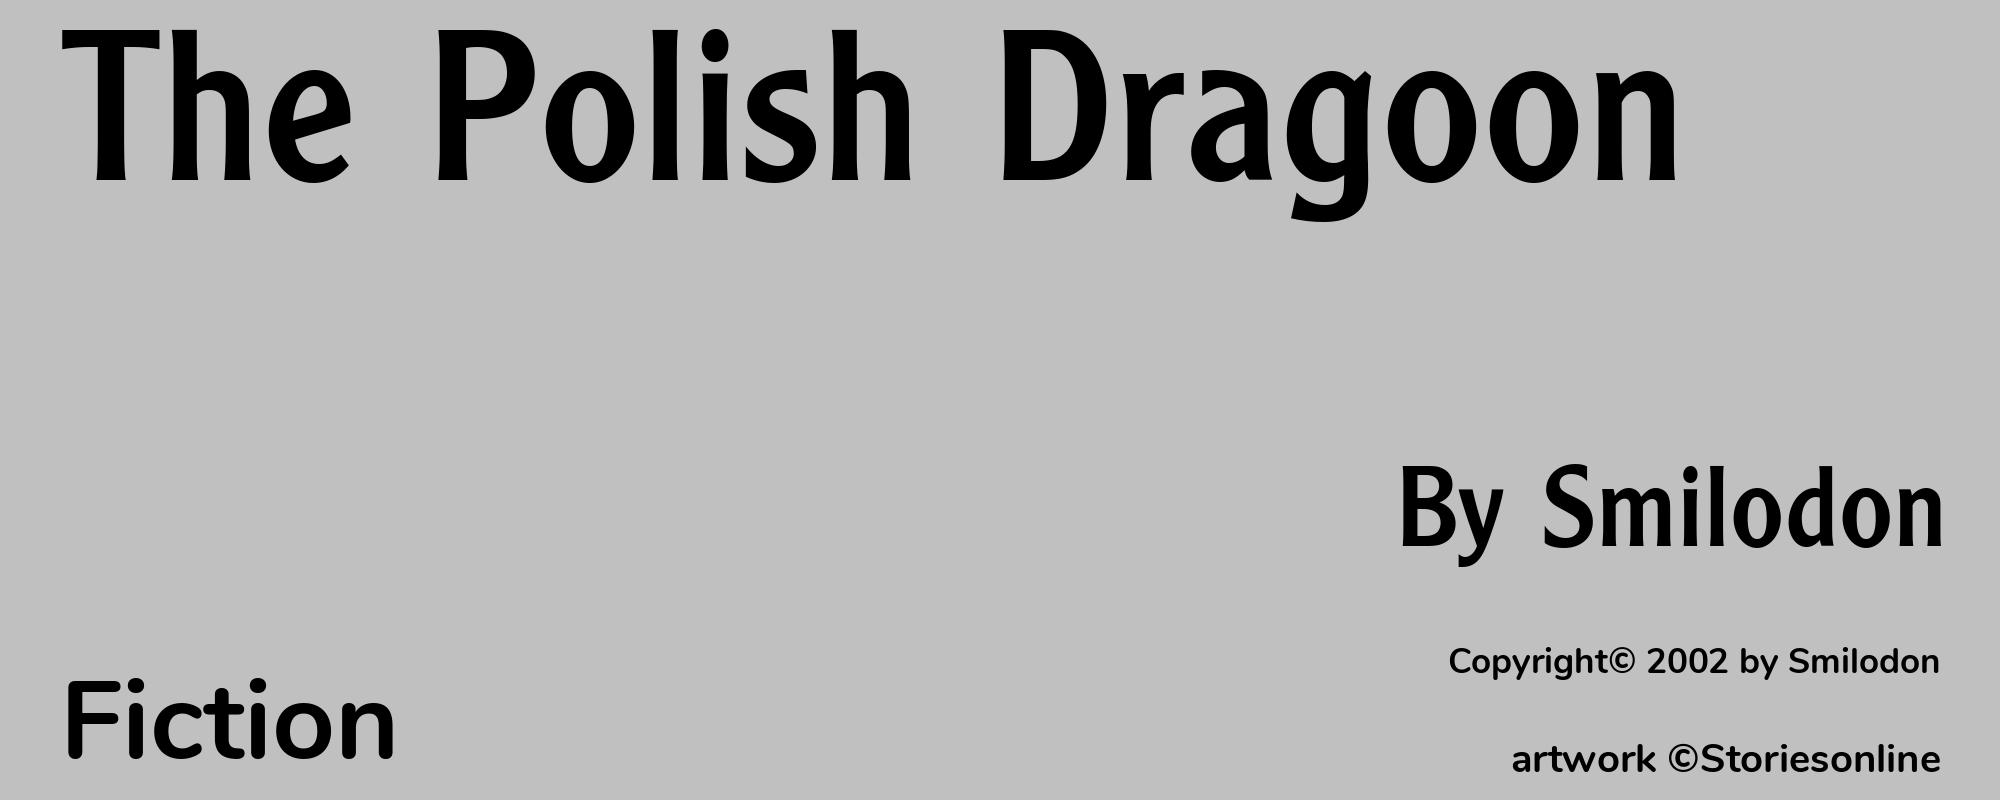 The Polish Dragoon - Cover